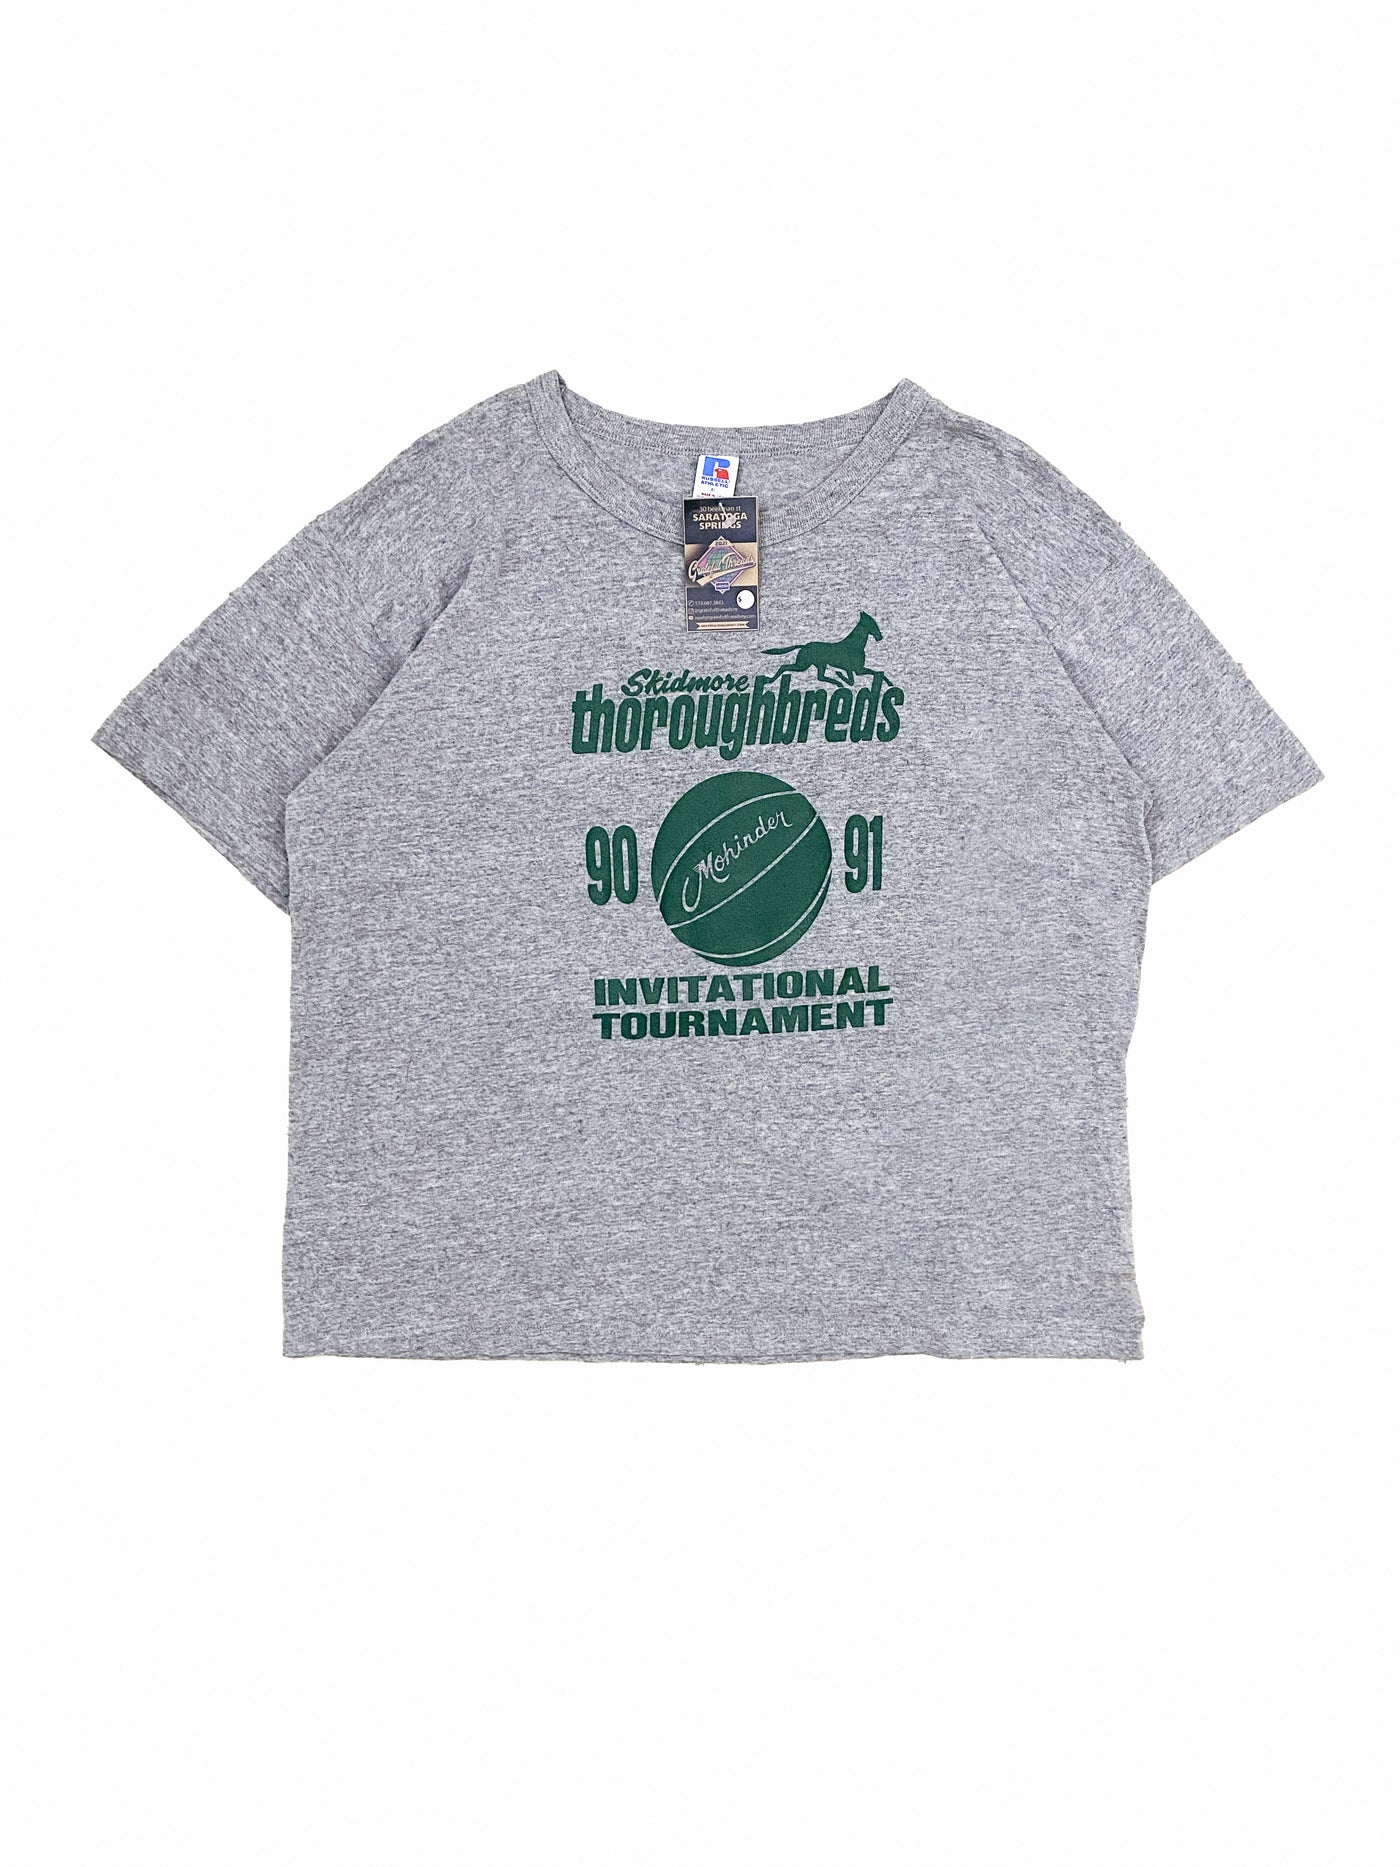 Vintage 1990 Skidmore Basketball Tournament T-Shirt